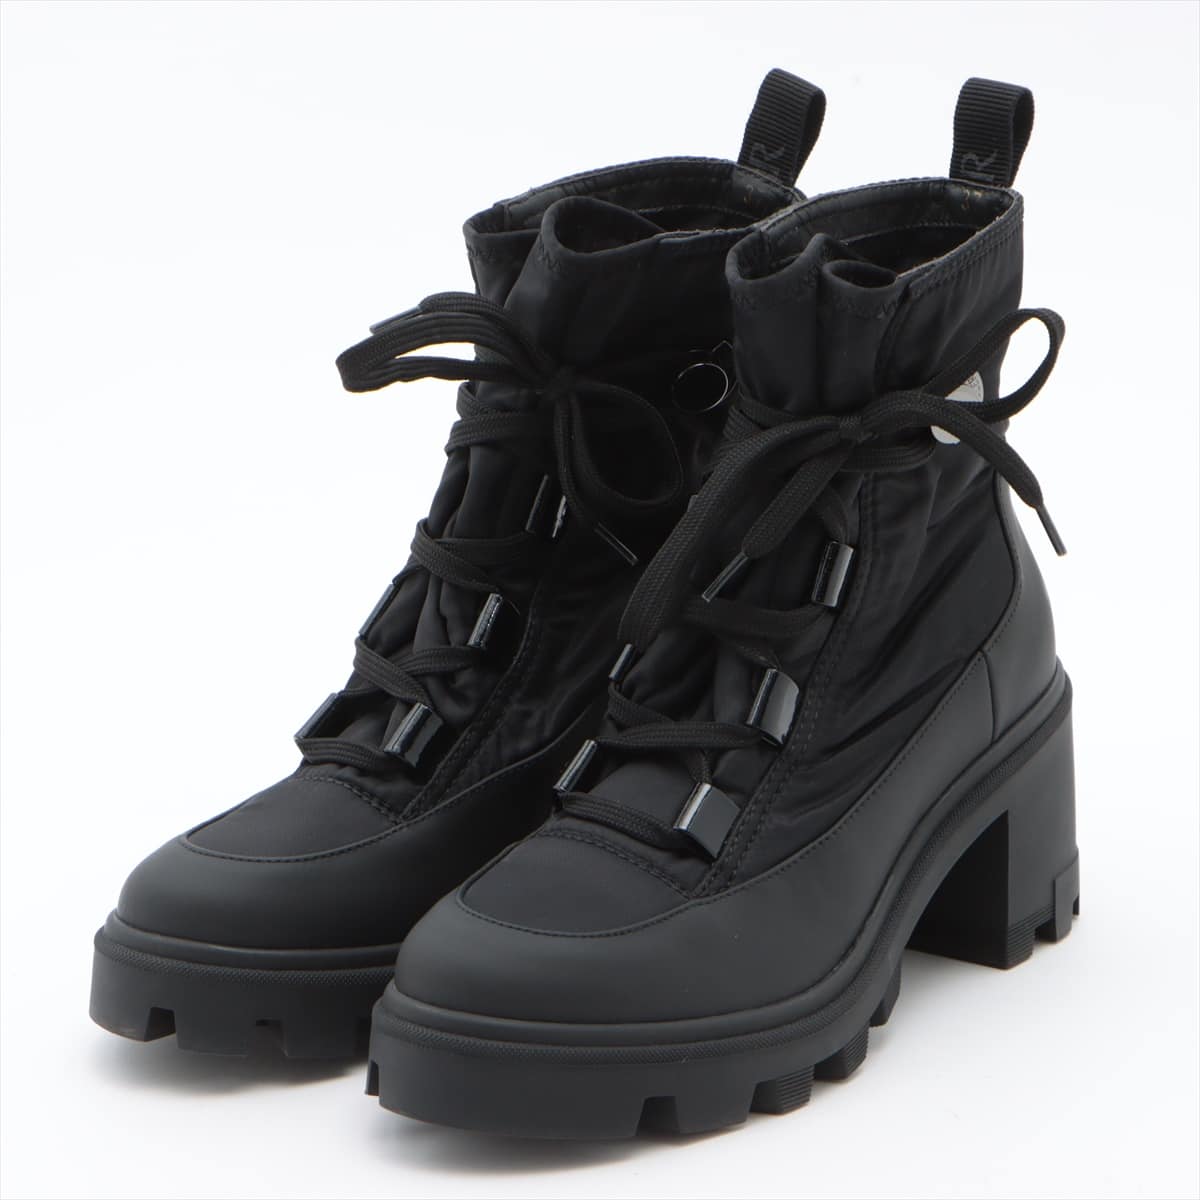 Moncler Nylon x Rubber Boots 37 Ladies' Black CHERYNE